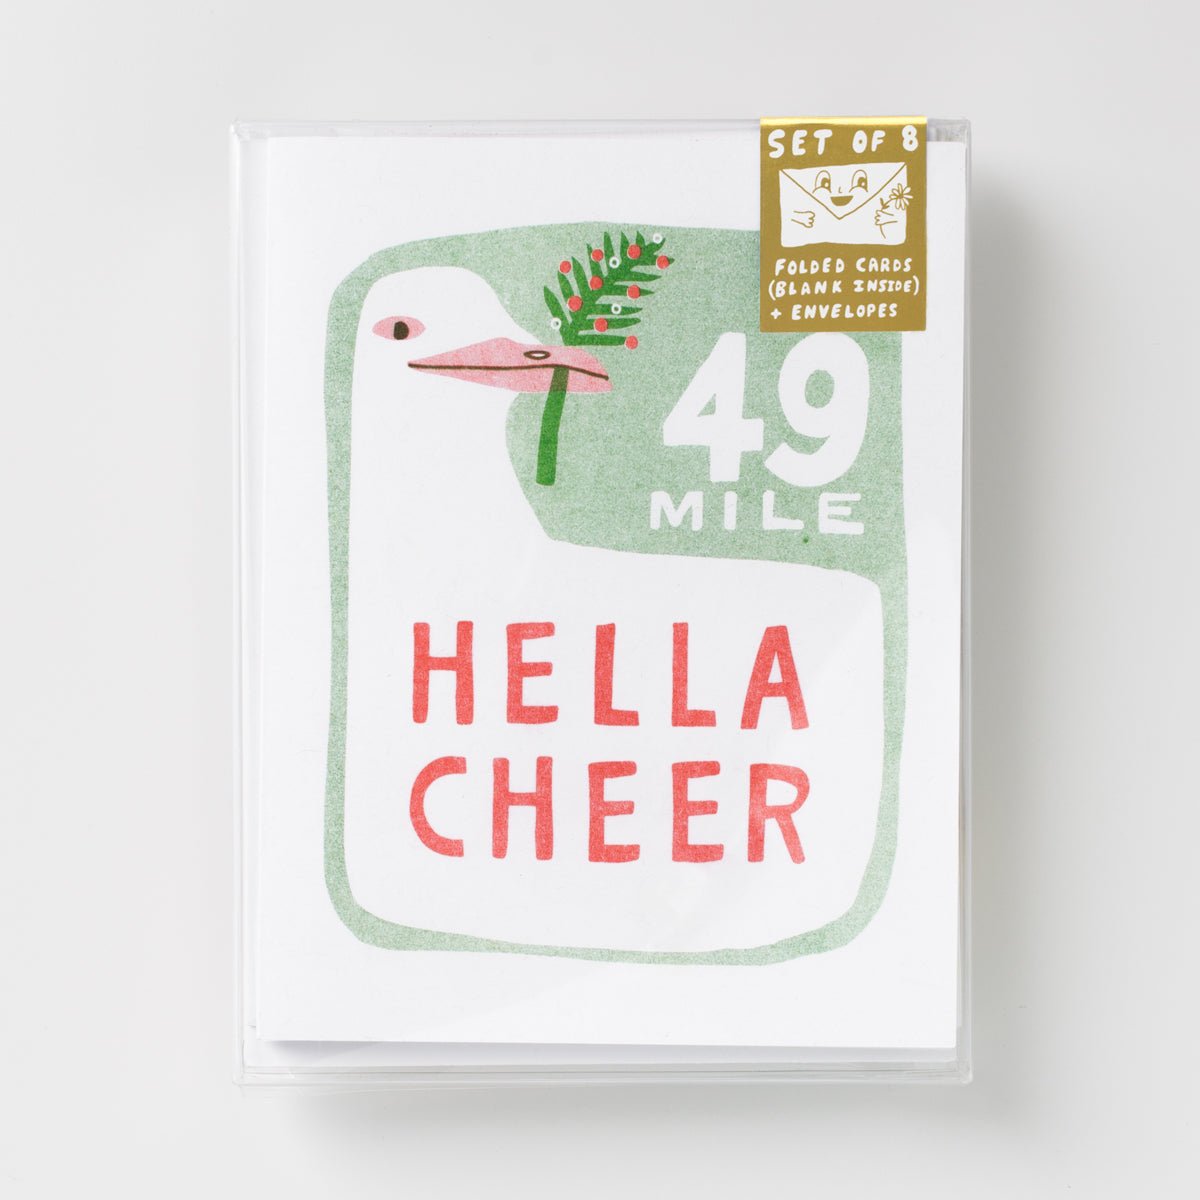 Hella Cheer - Risograph Card Set - Yellow Owl Workshop